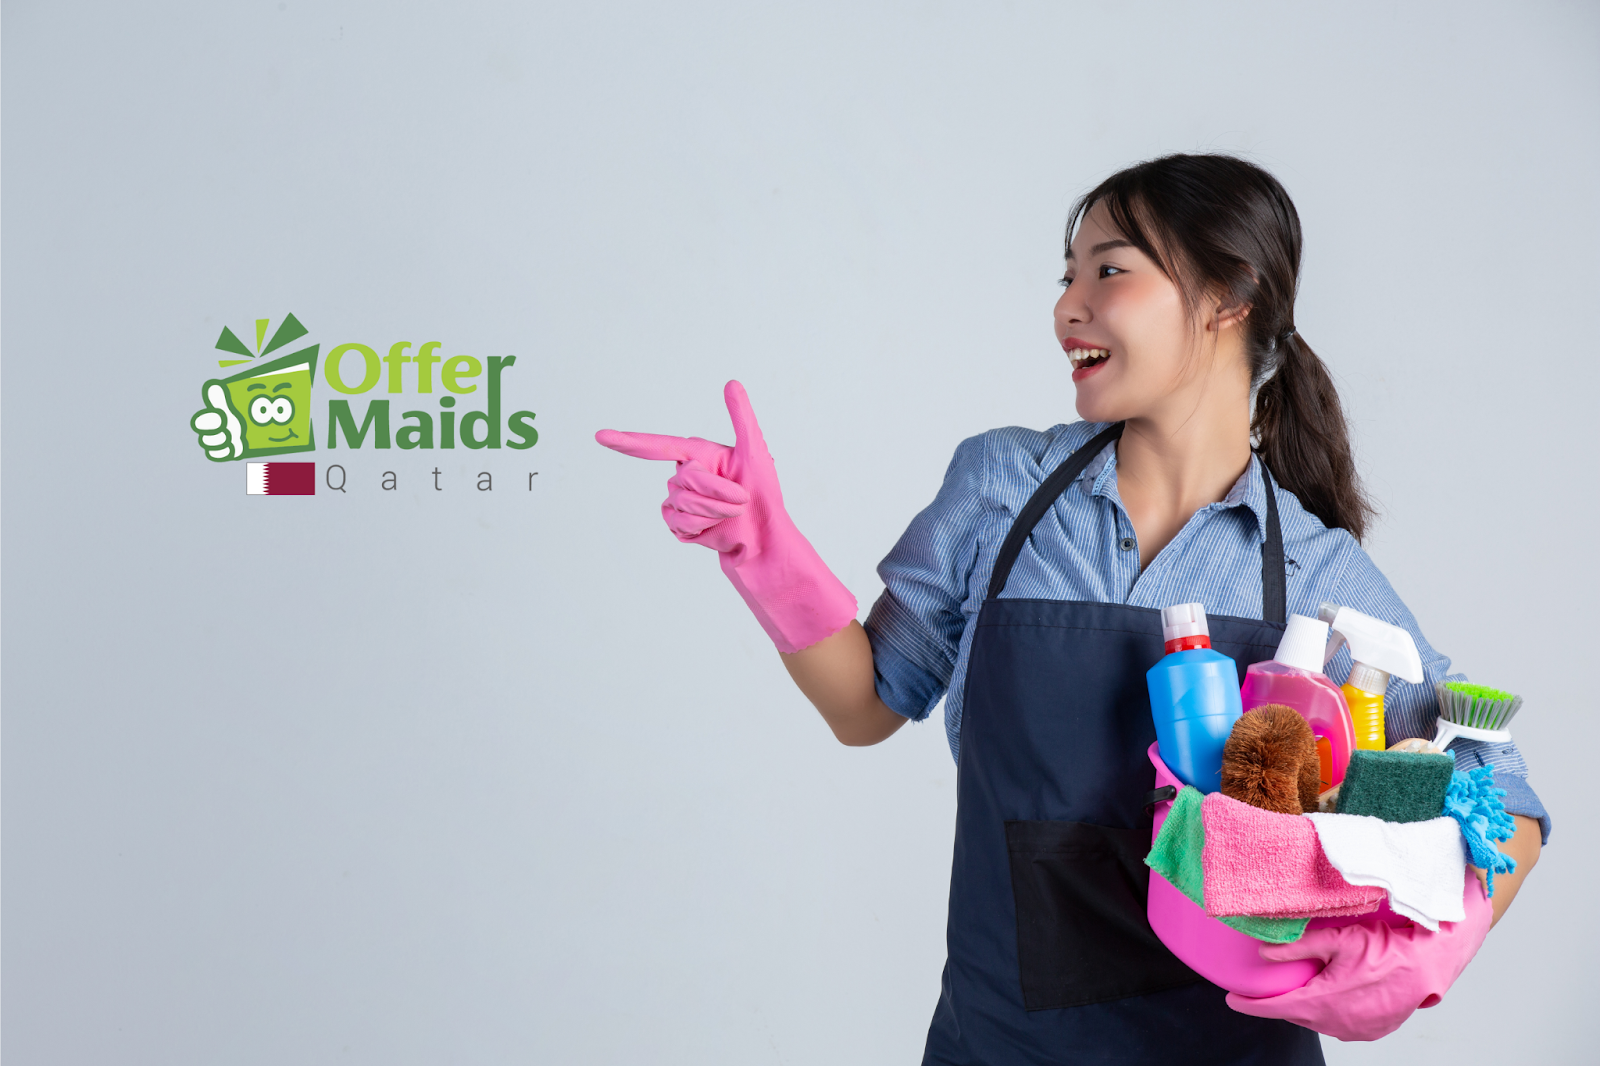 hourly maids service in Qatar